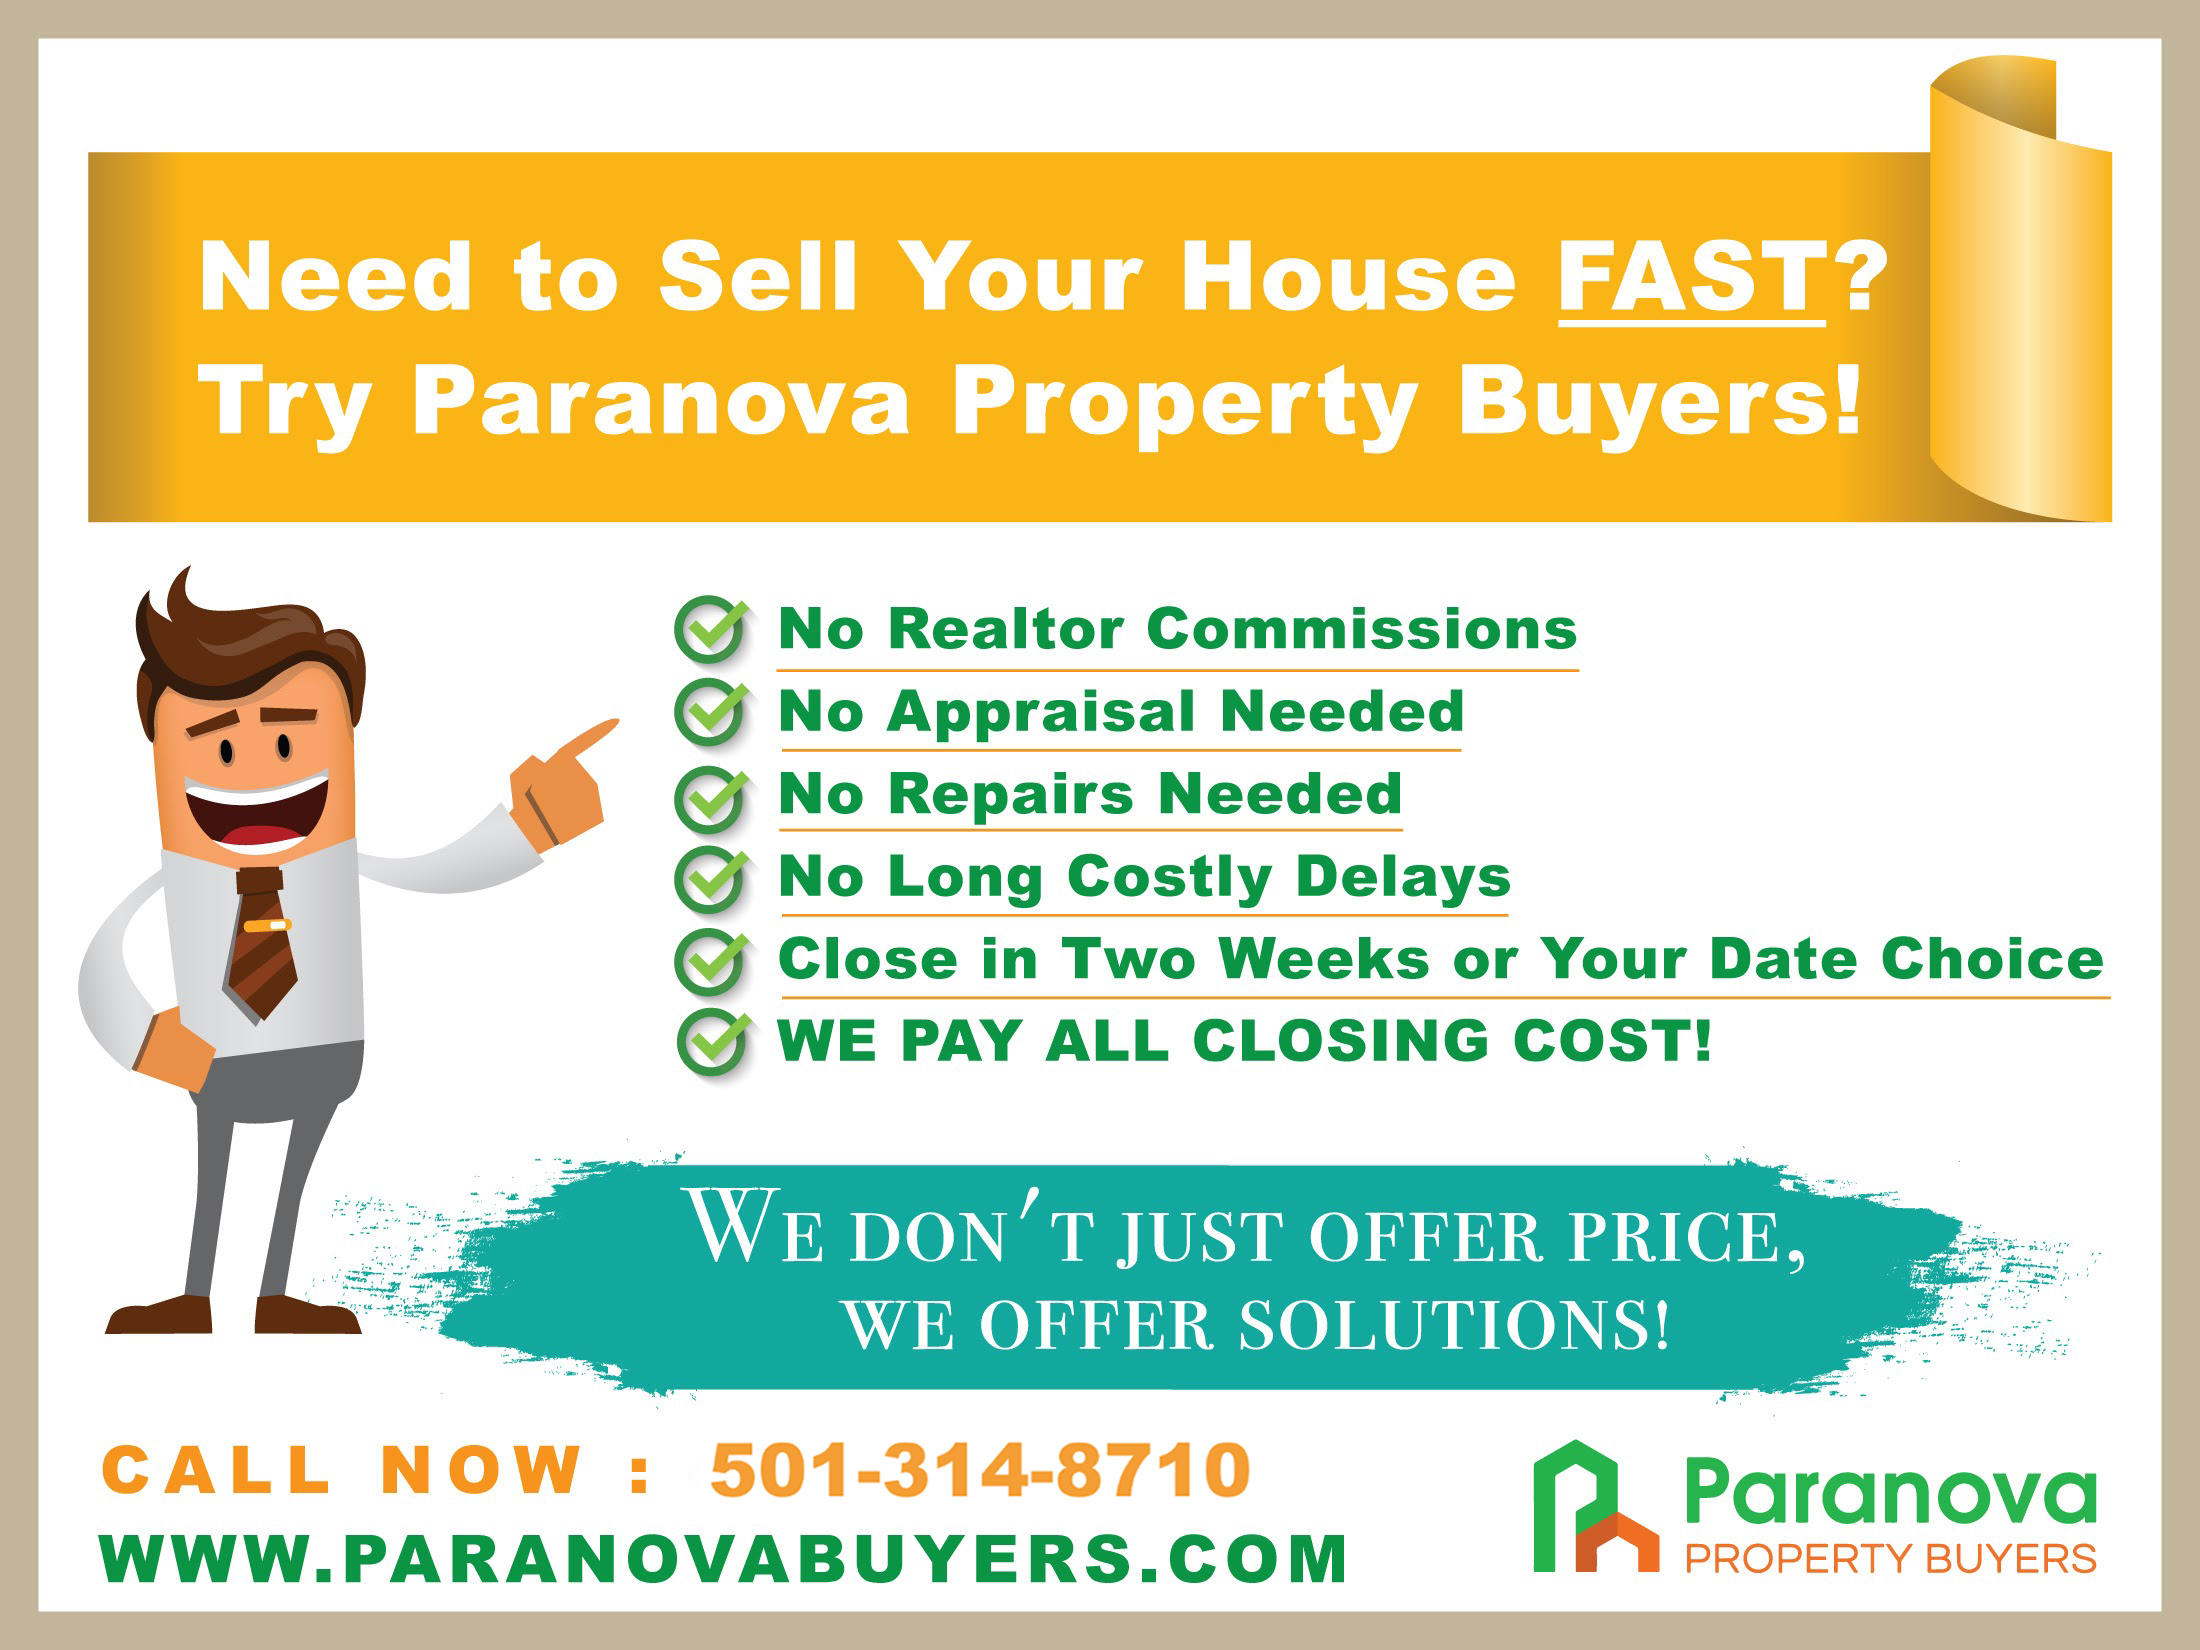 Paranova Property Buyers Photo